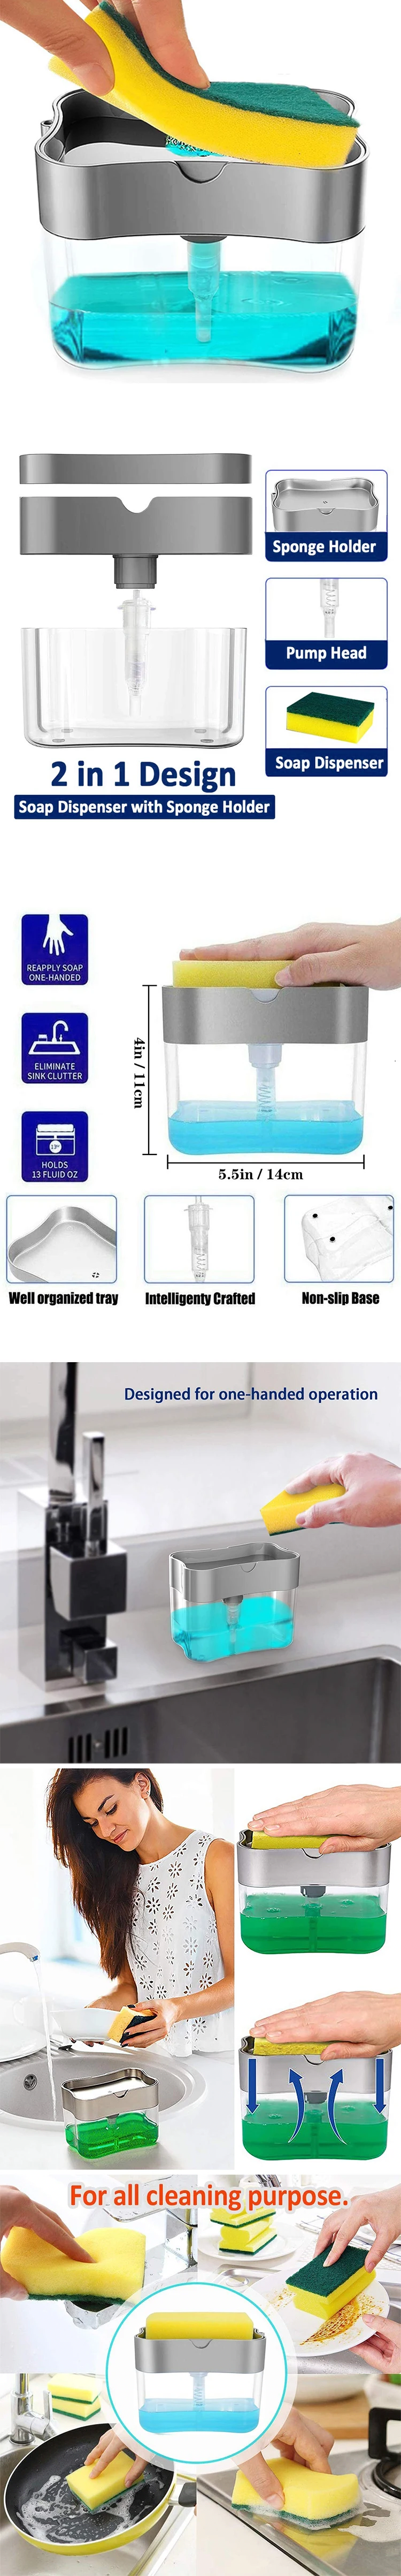 Factory Manufactures Cheap Price Sponge Holder 2 in 1 Box Kitchen Sink liquid Soap Dispenser